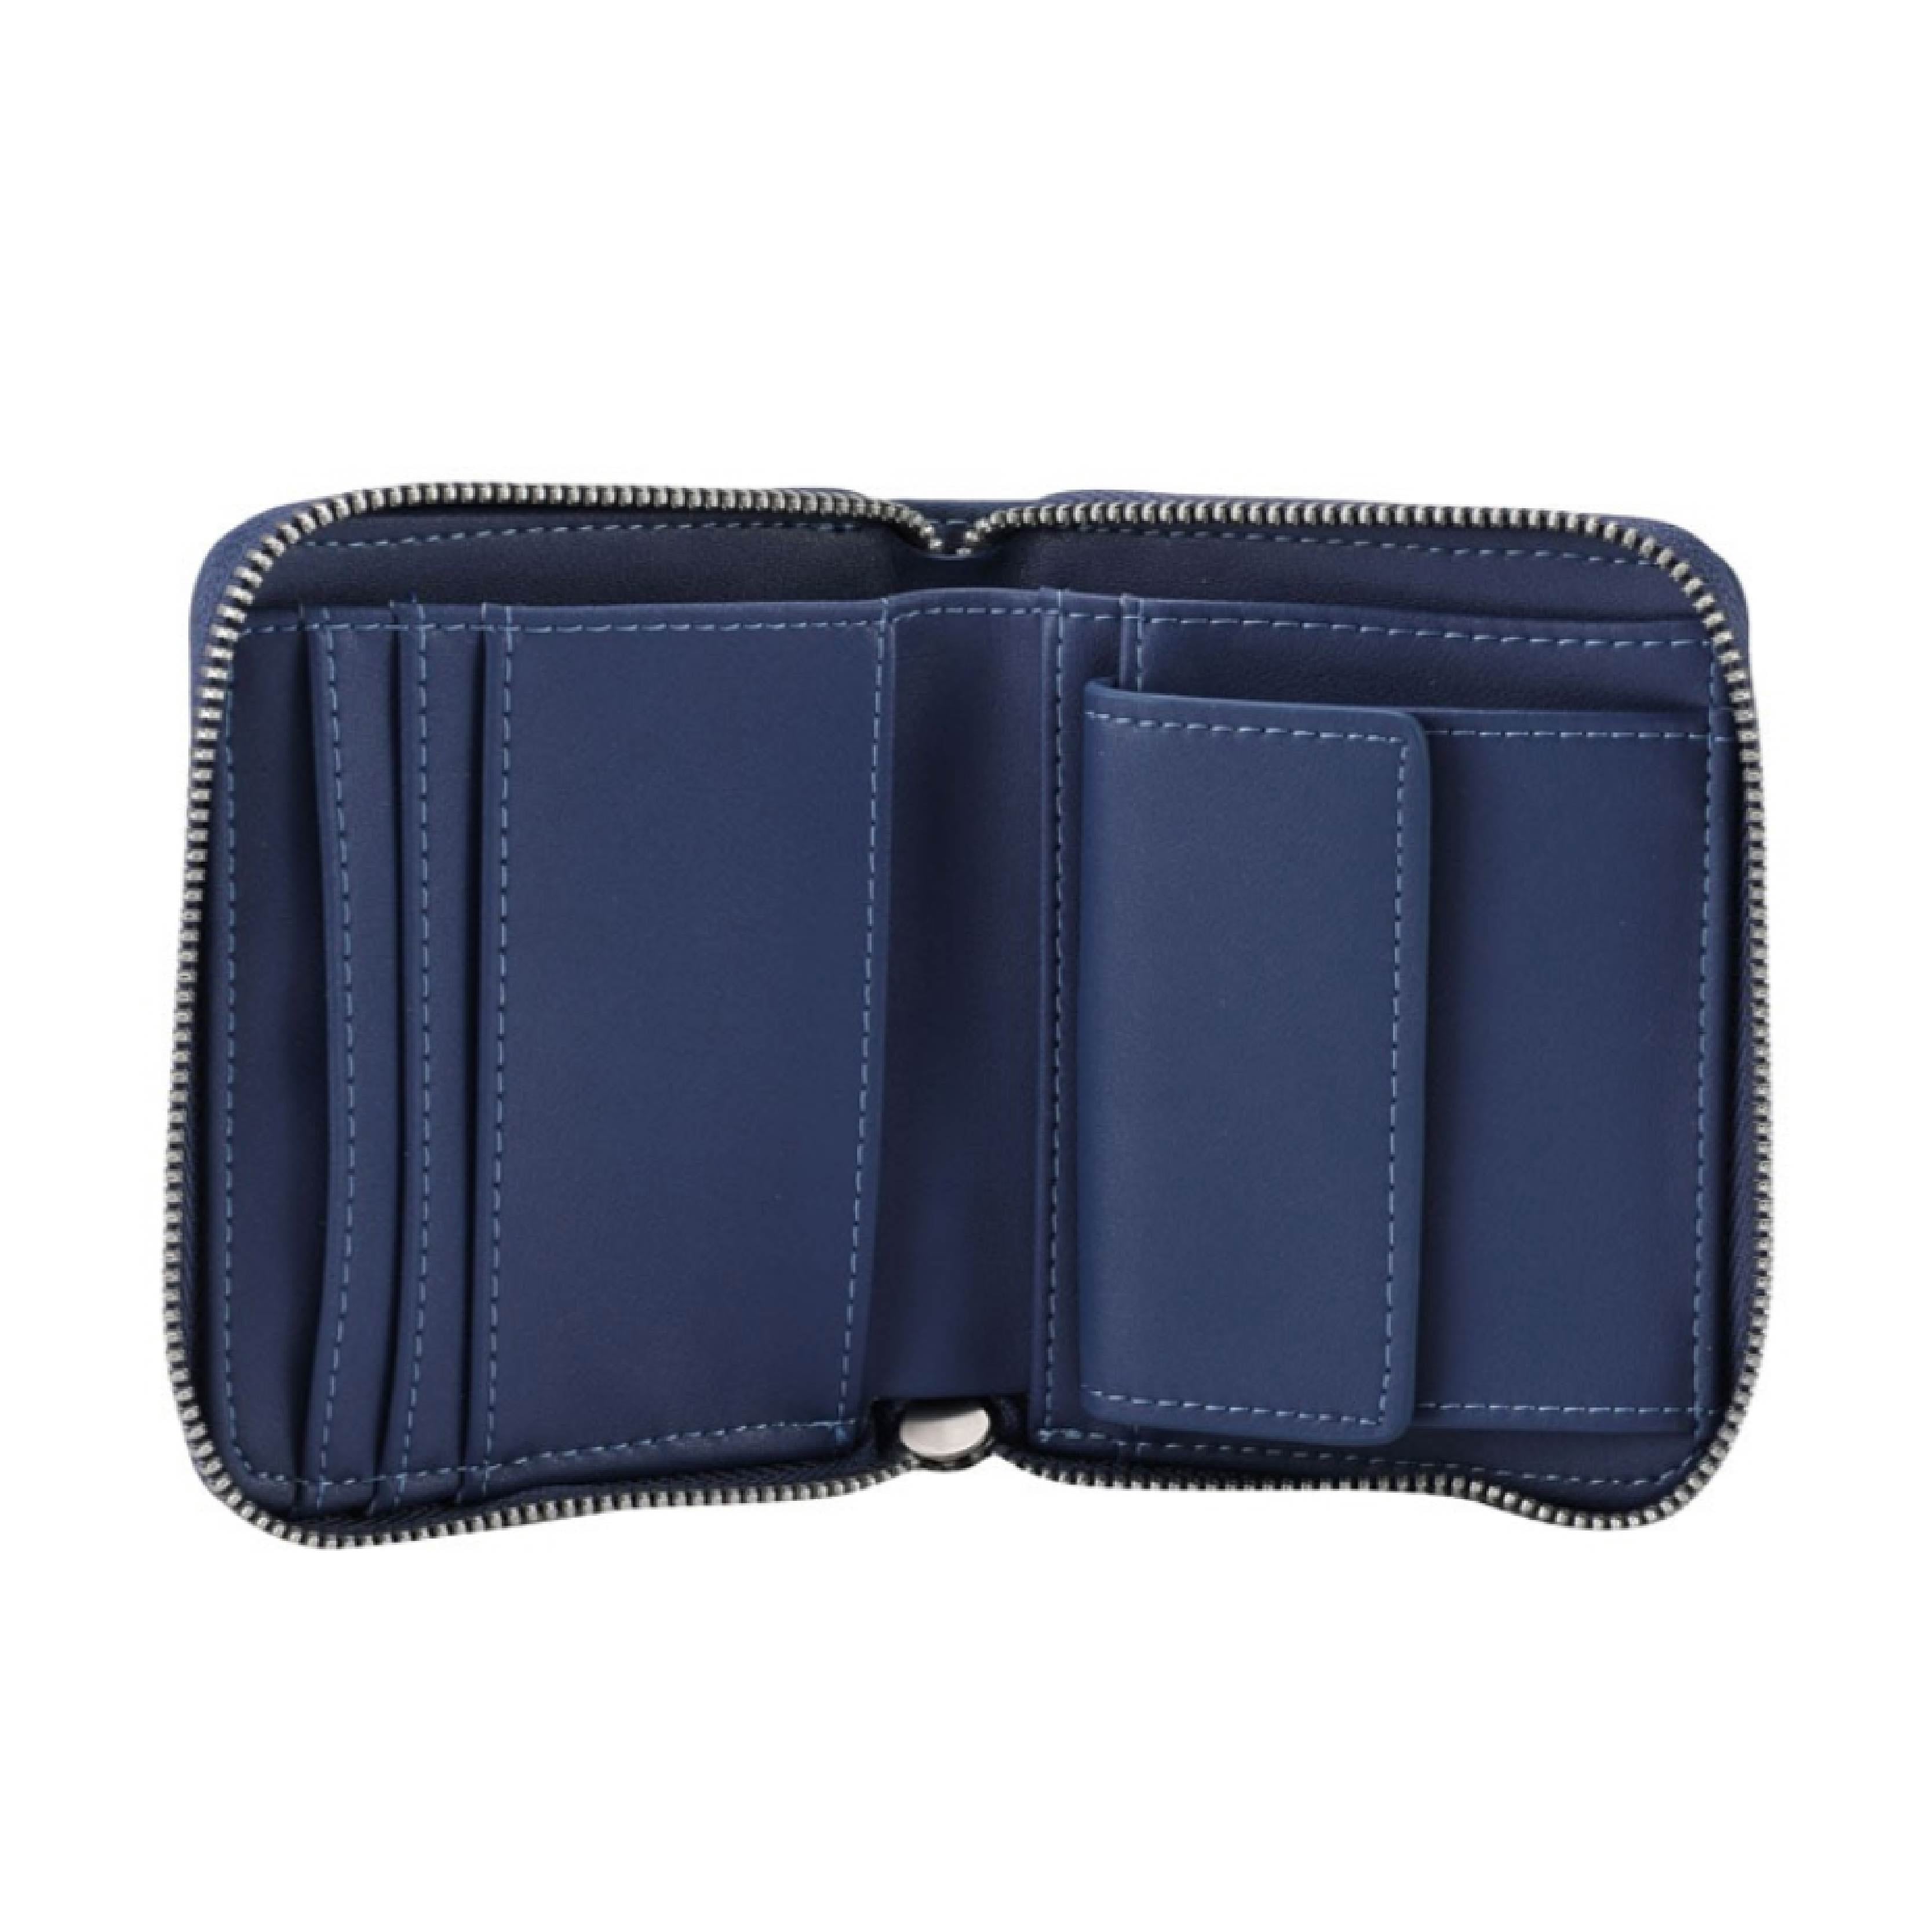 ELLE Rae short Zip around wallet in Blue | Isetan KL Online Store